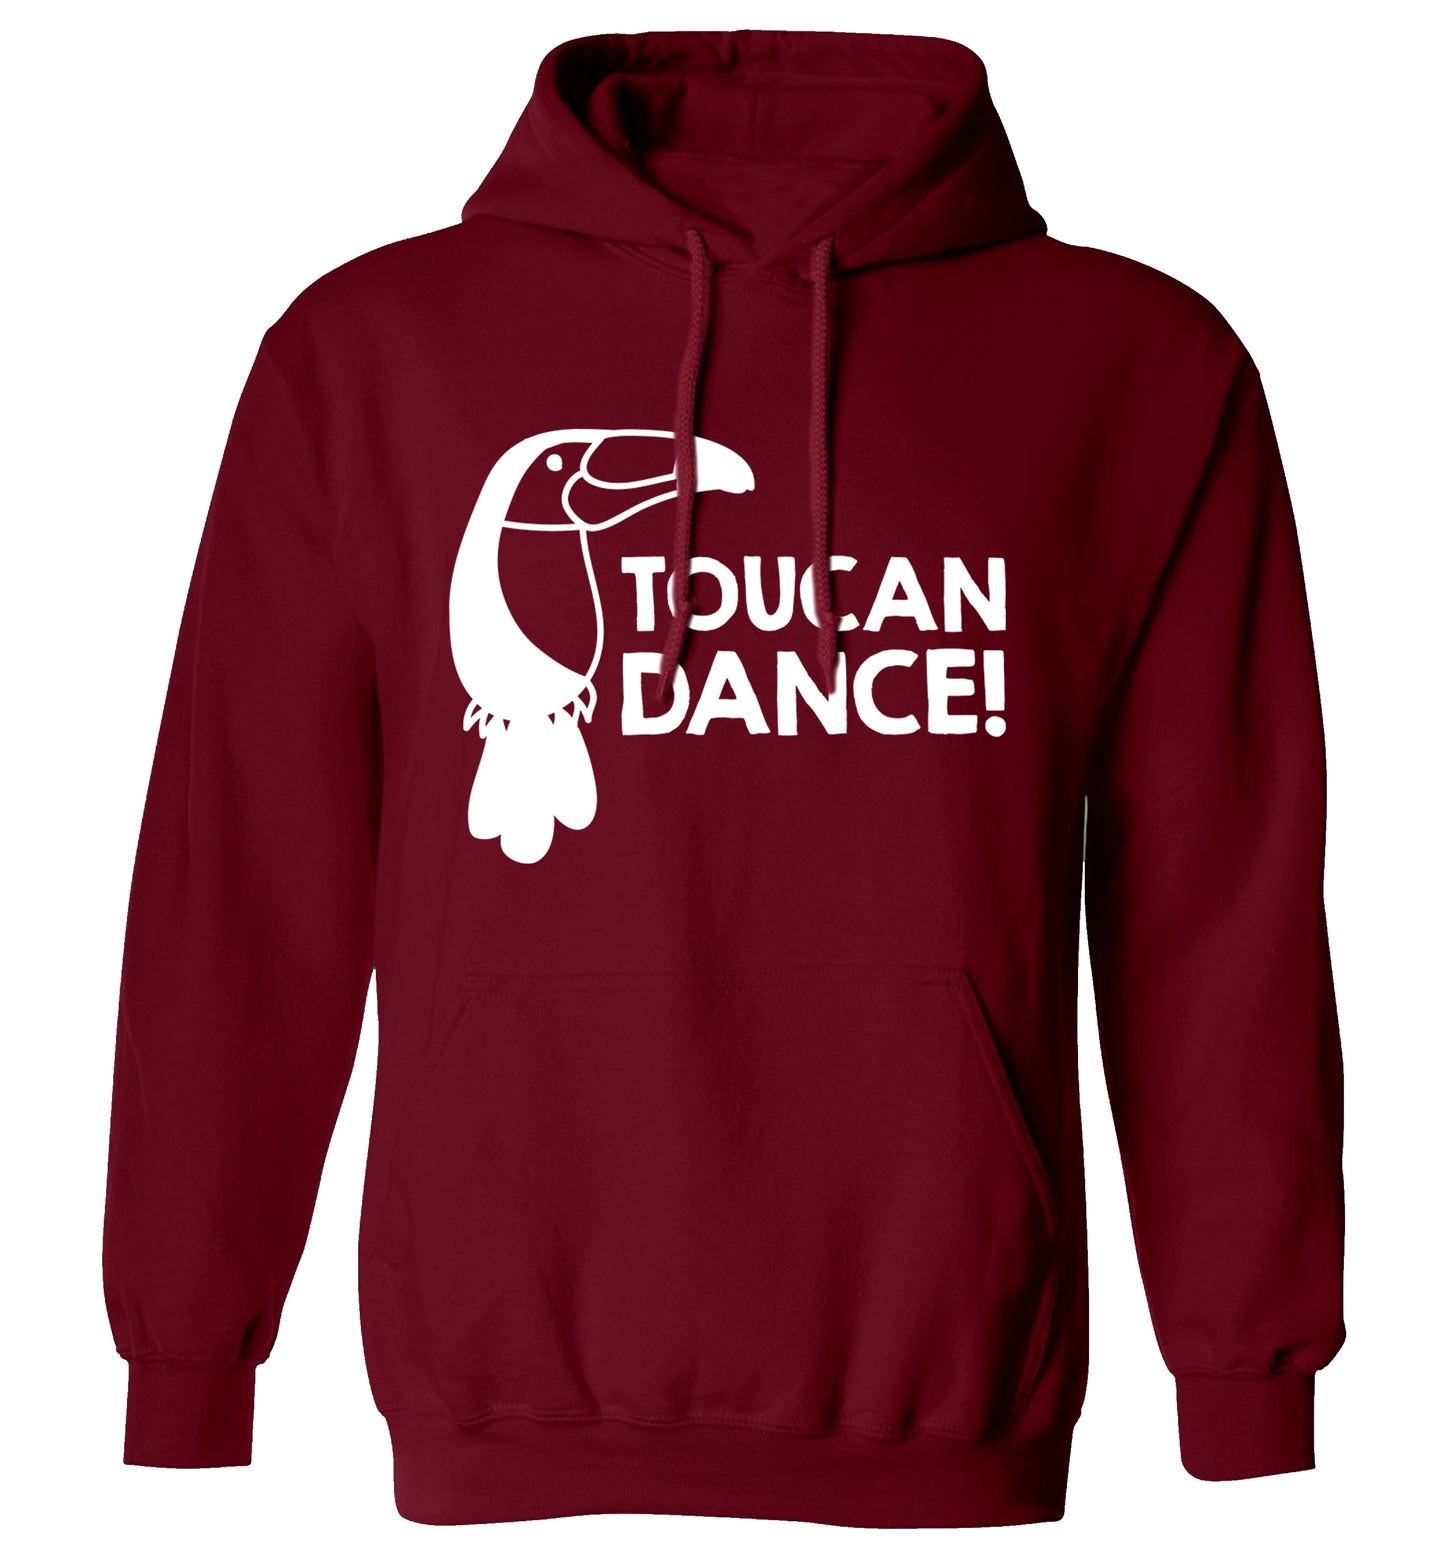 Toucan dance adults unisex maroon hoodie 2XL